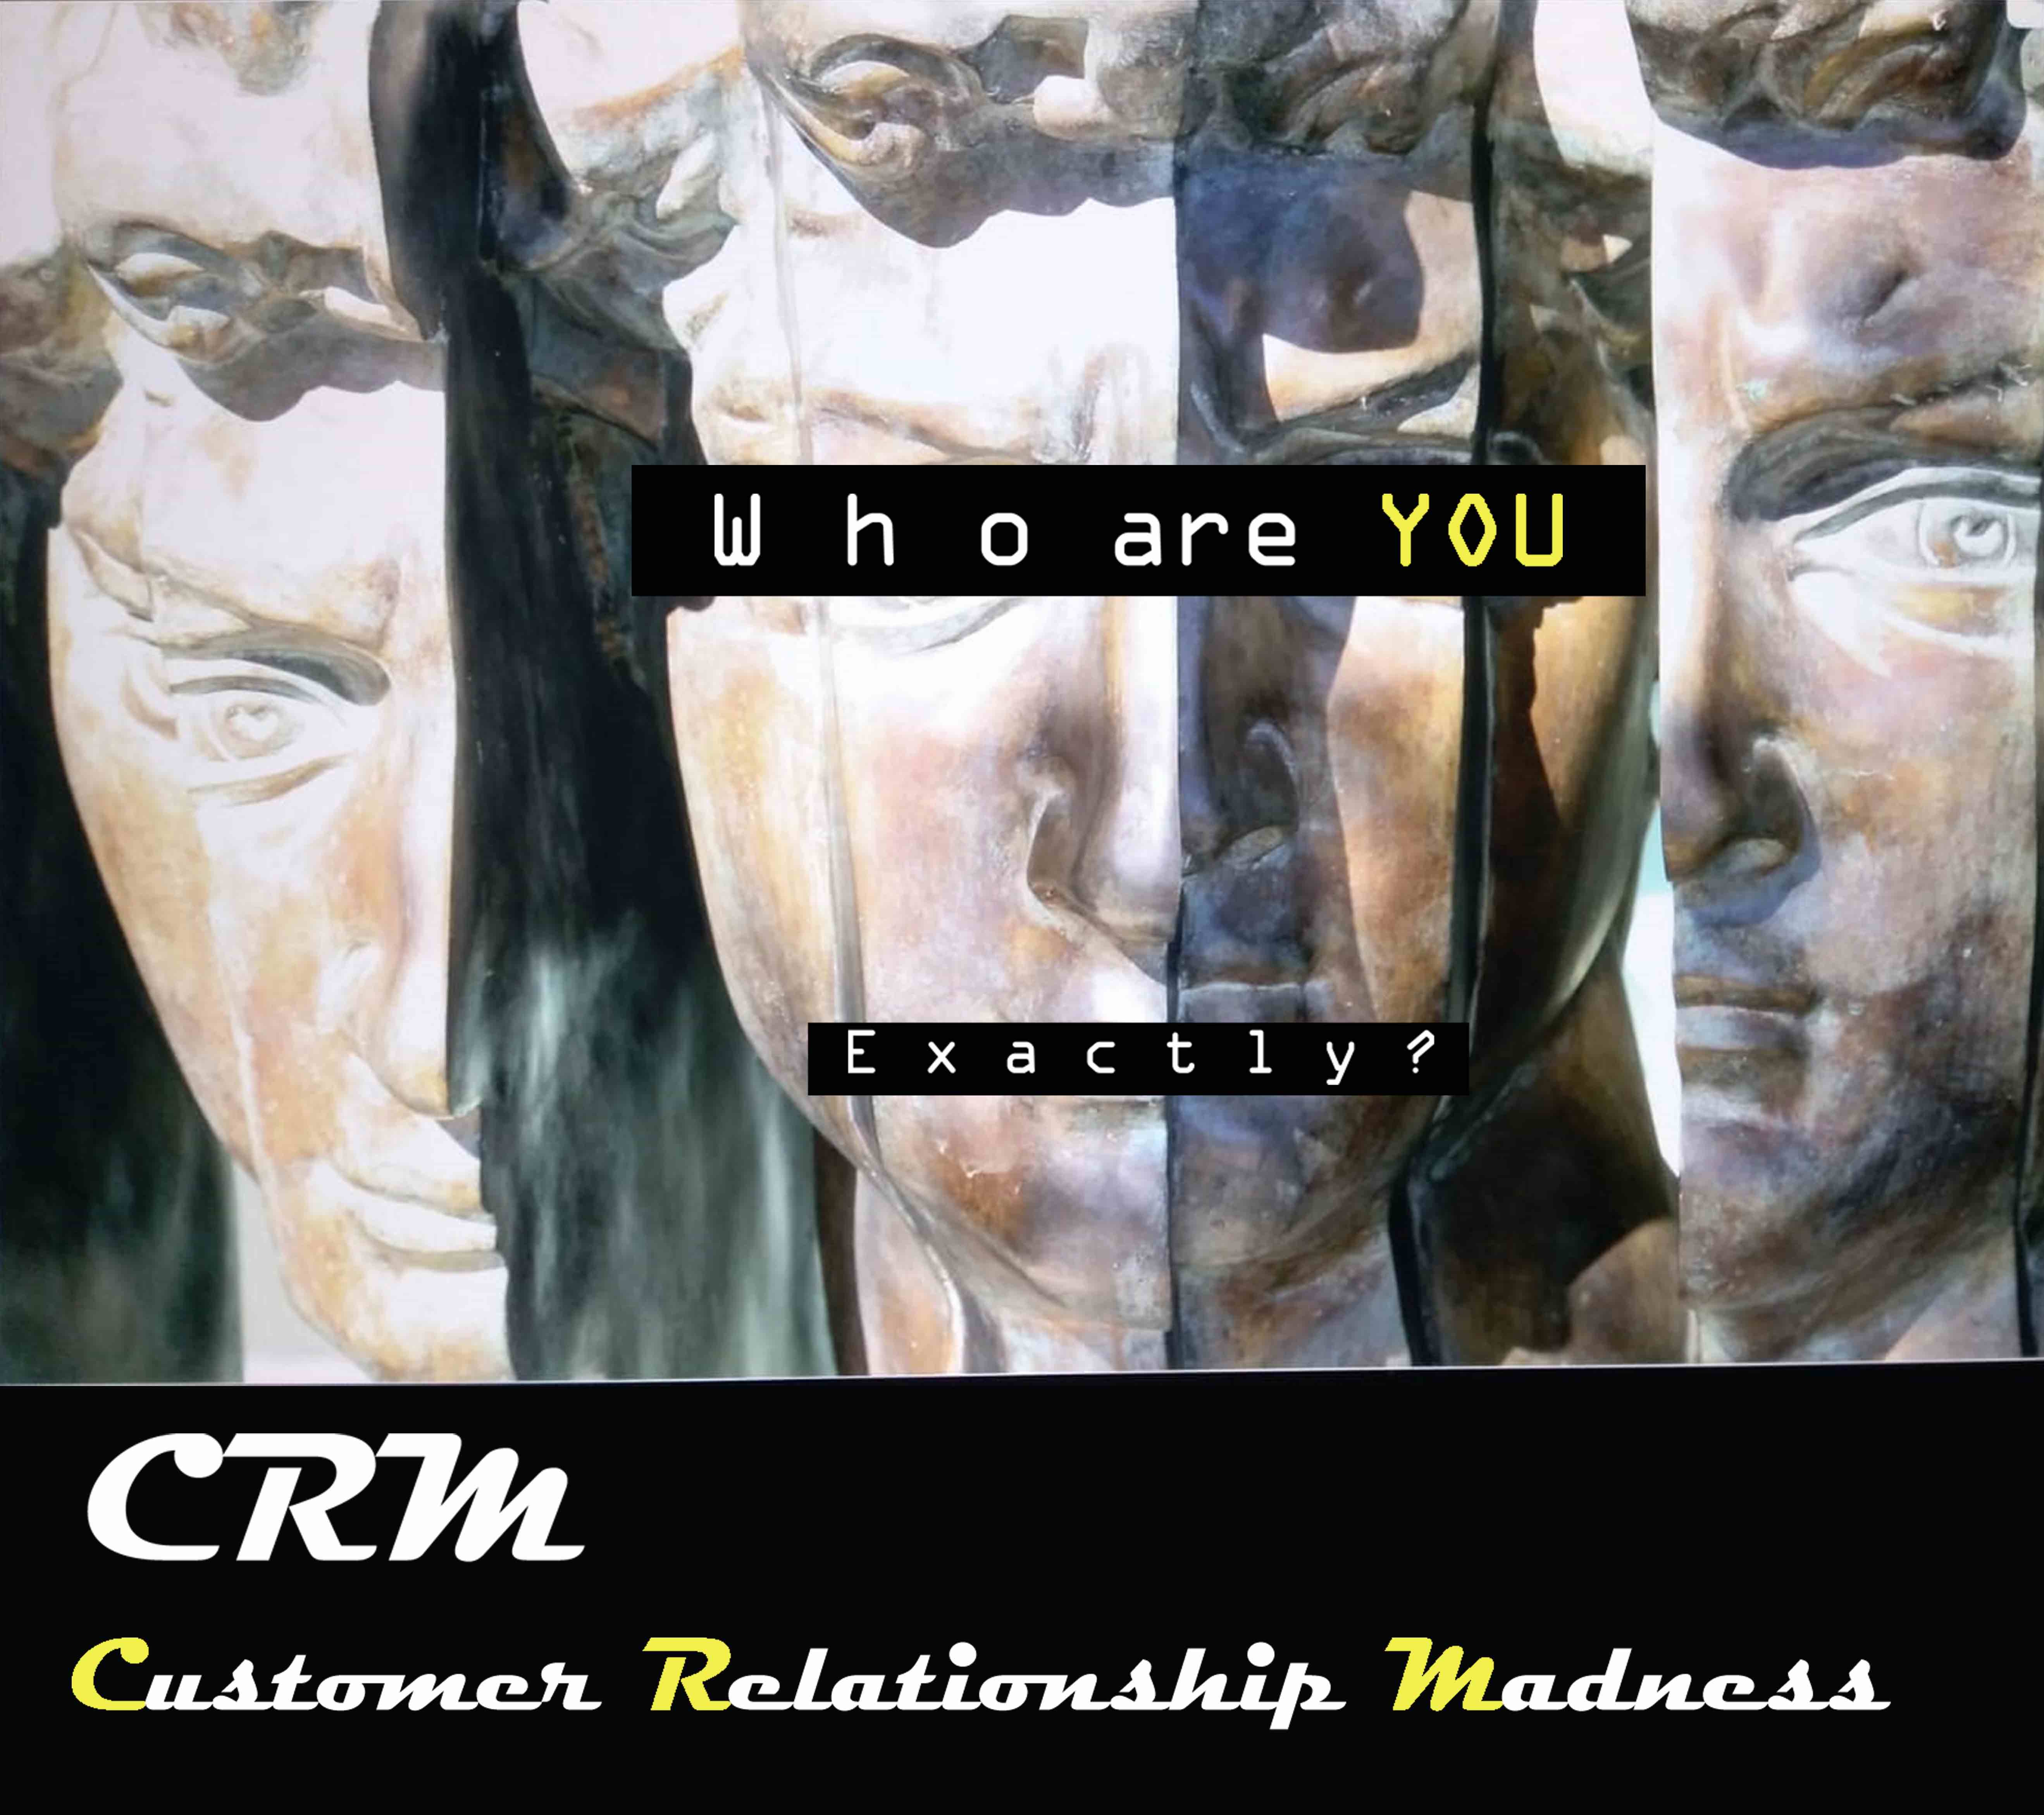 Who are you exactly? - Album d'esordio per i CRM